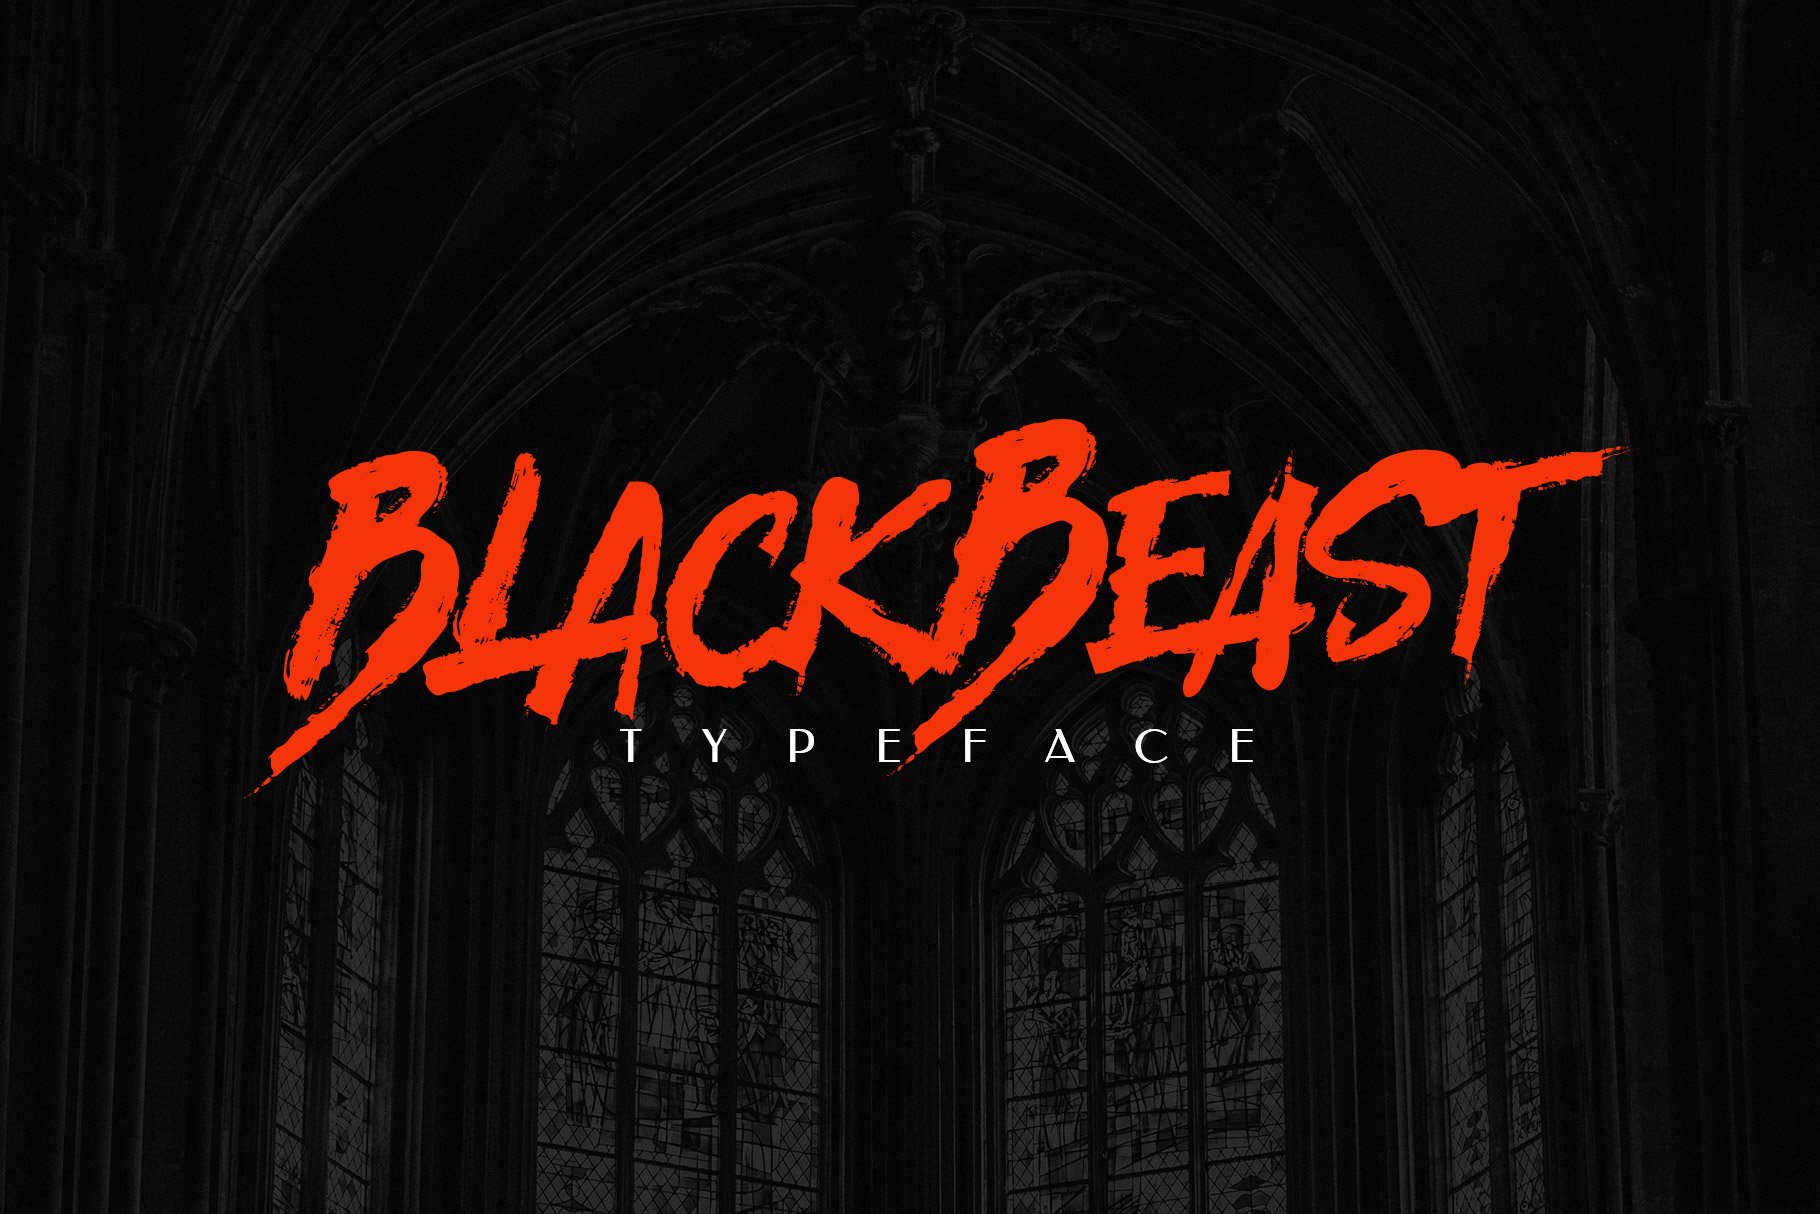 BlackBeast Typeface cover image.